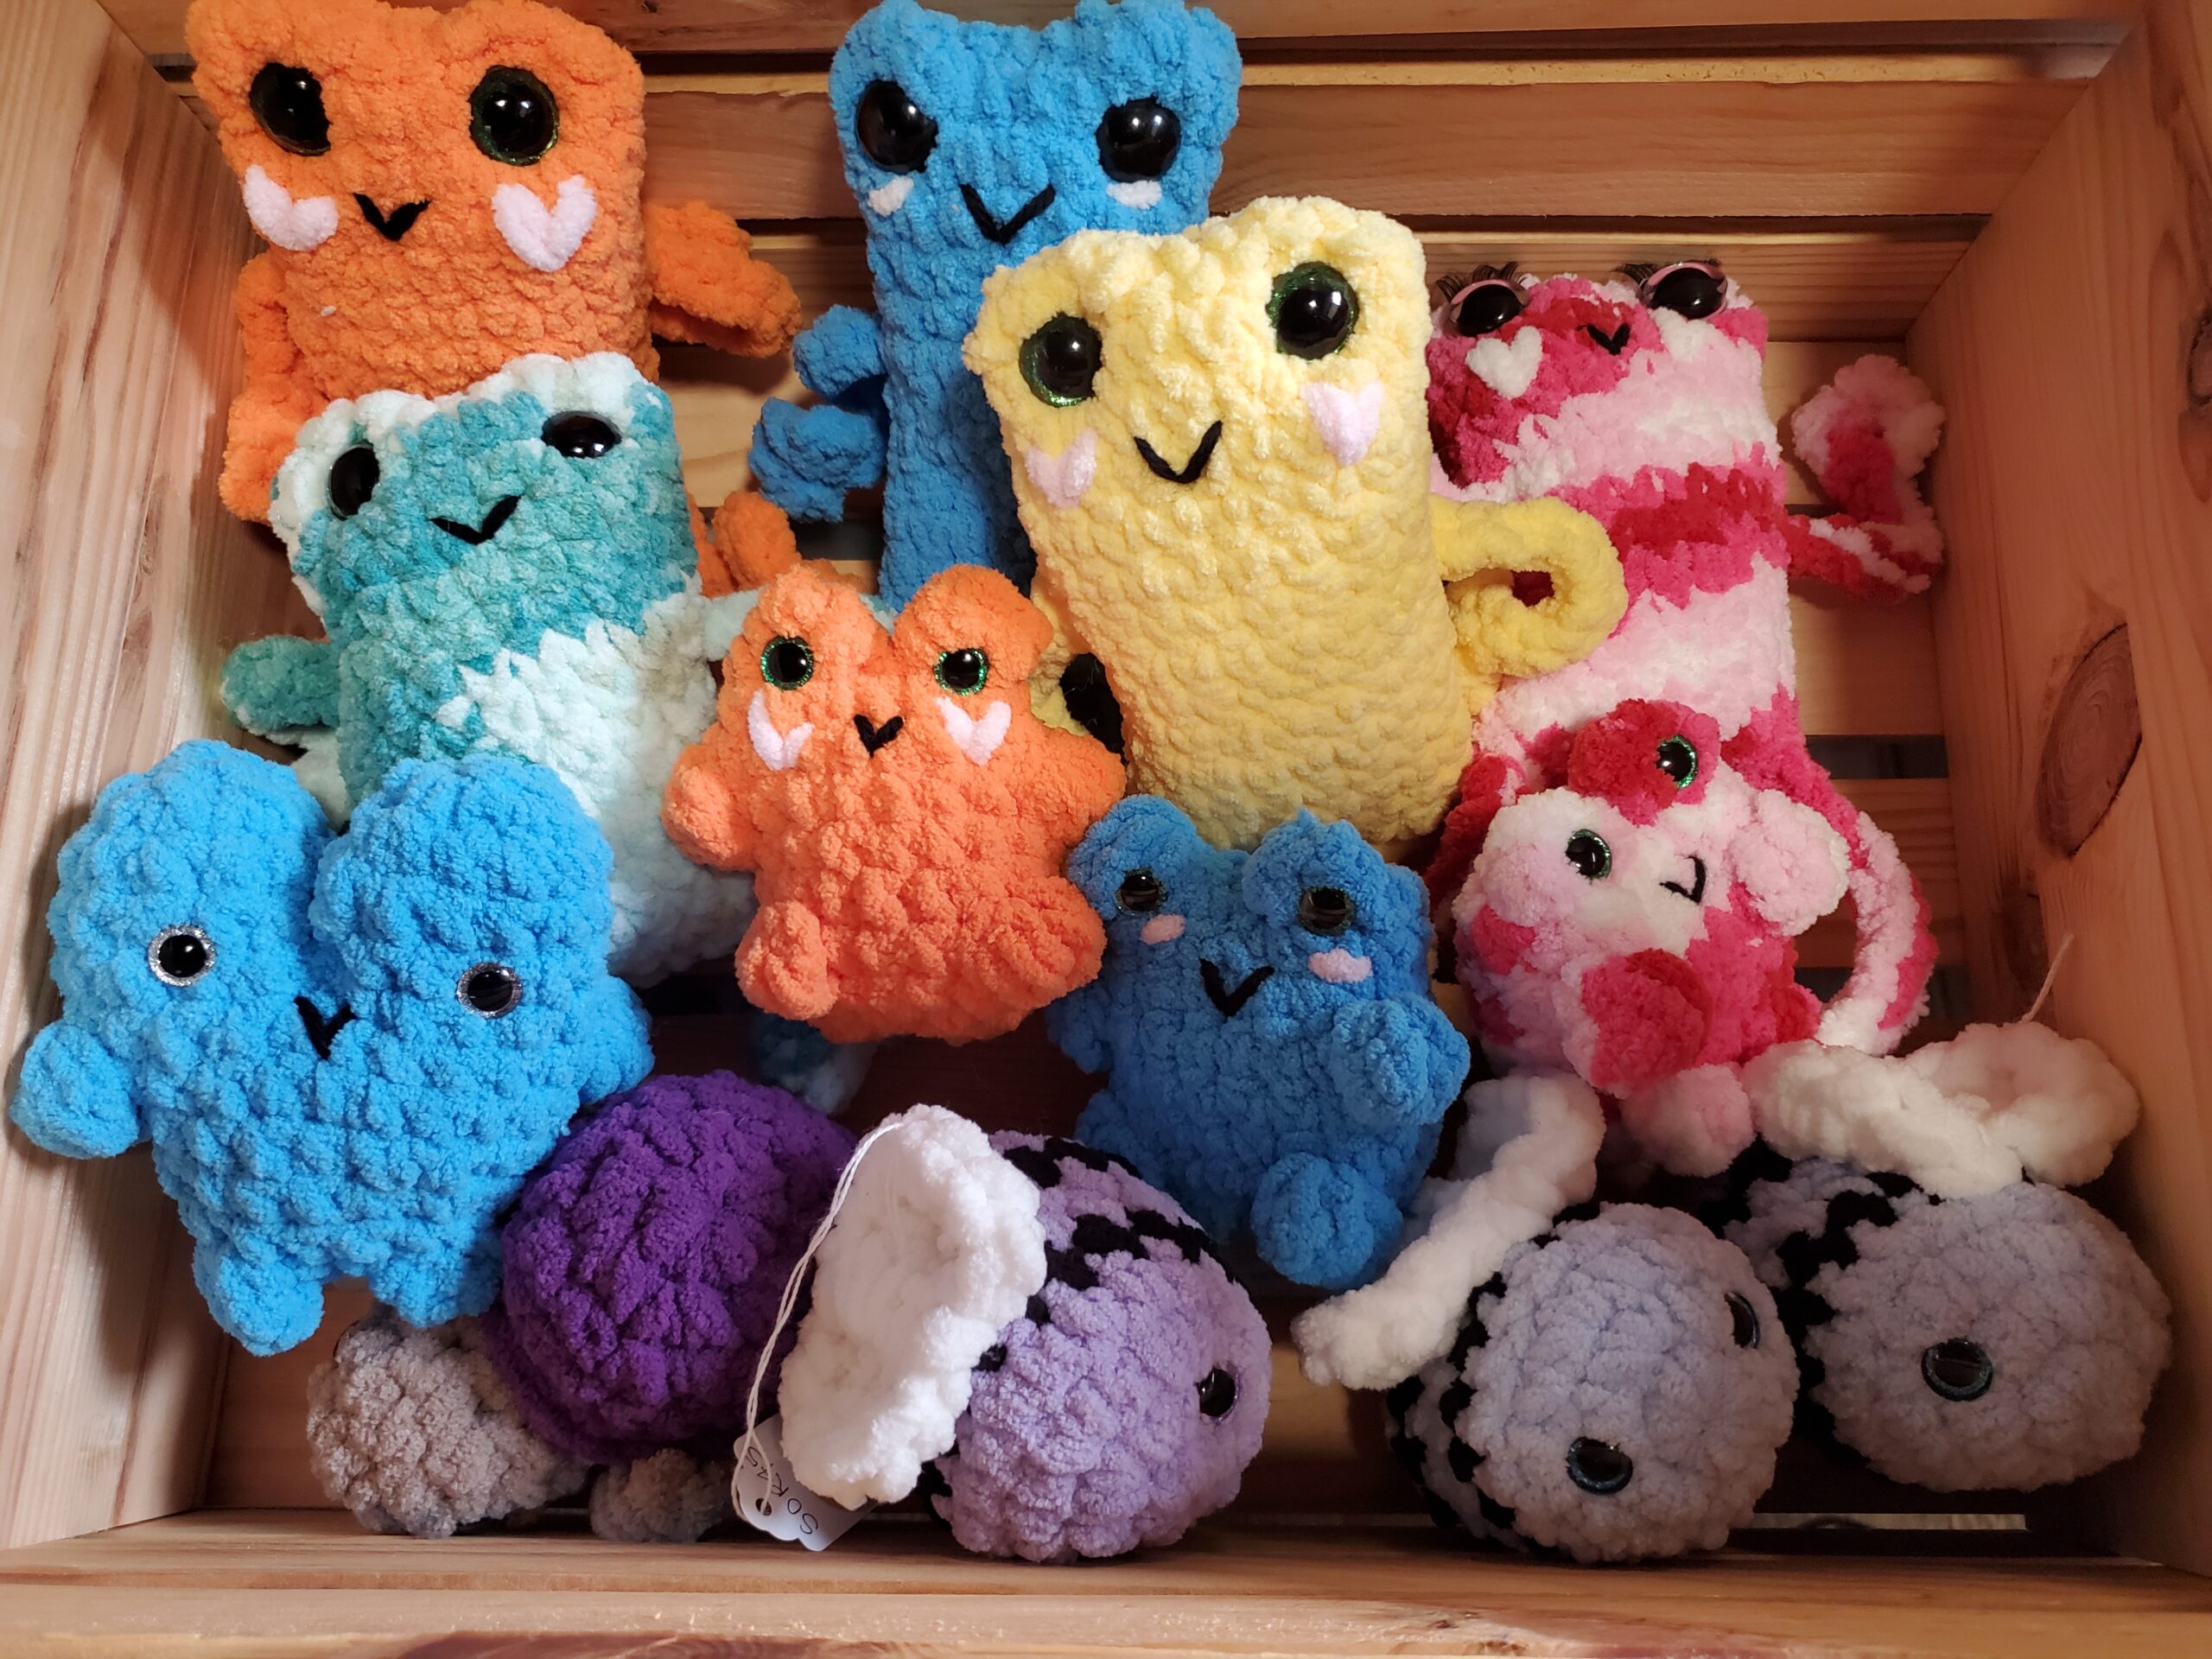 Yellow, Blue, Pink, Purple, Orange, Teal squishy crocheted stuffed animals. Handmade by "Sonirations"